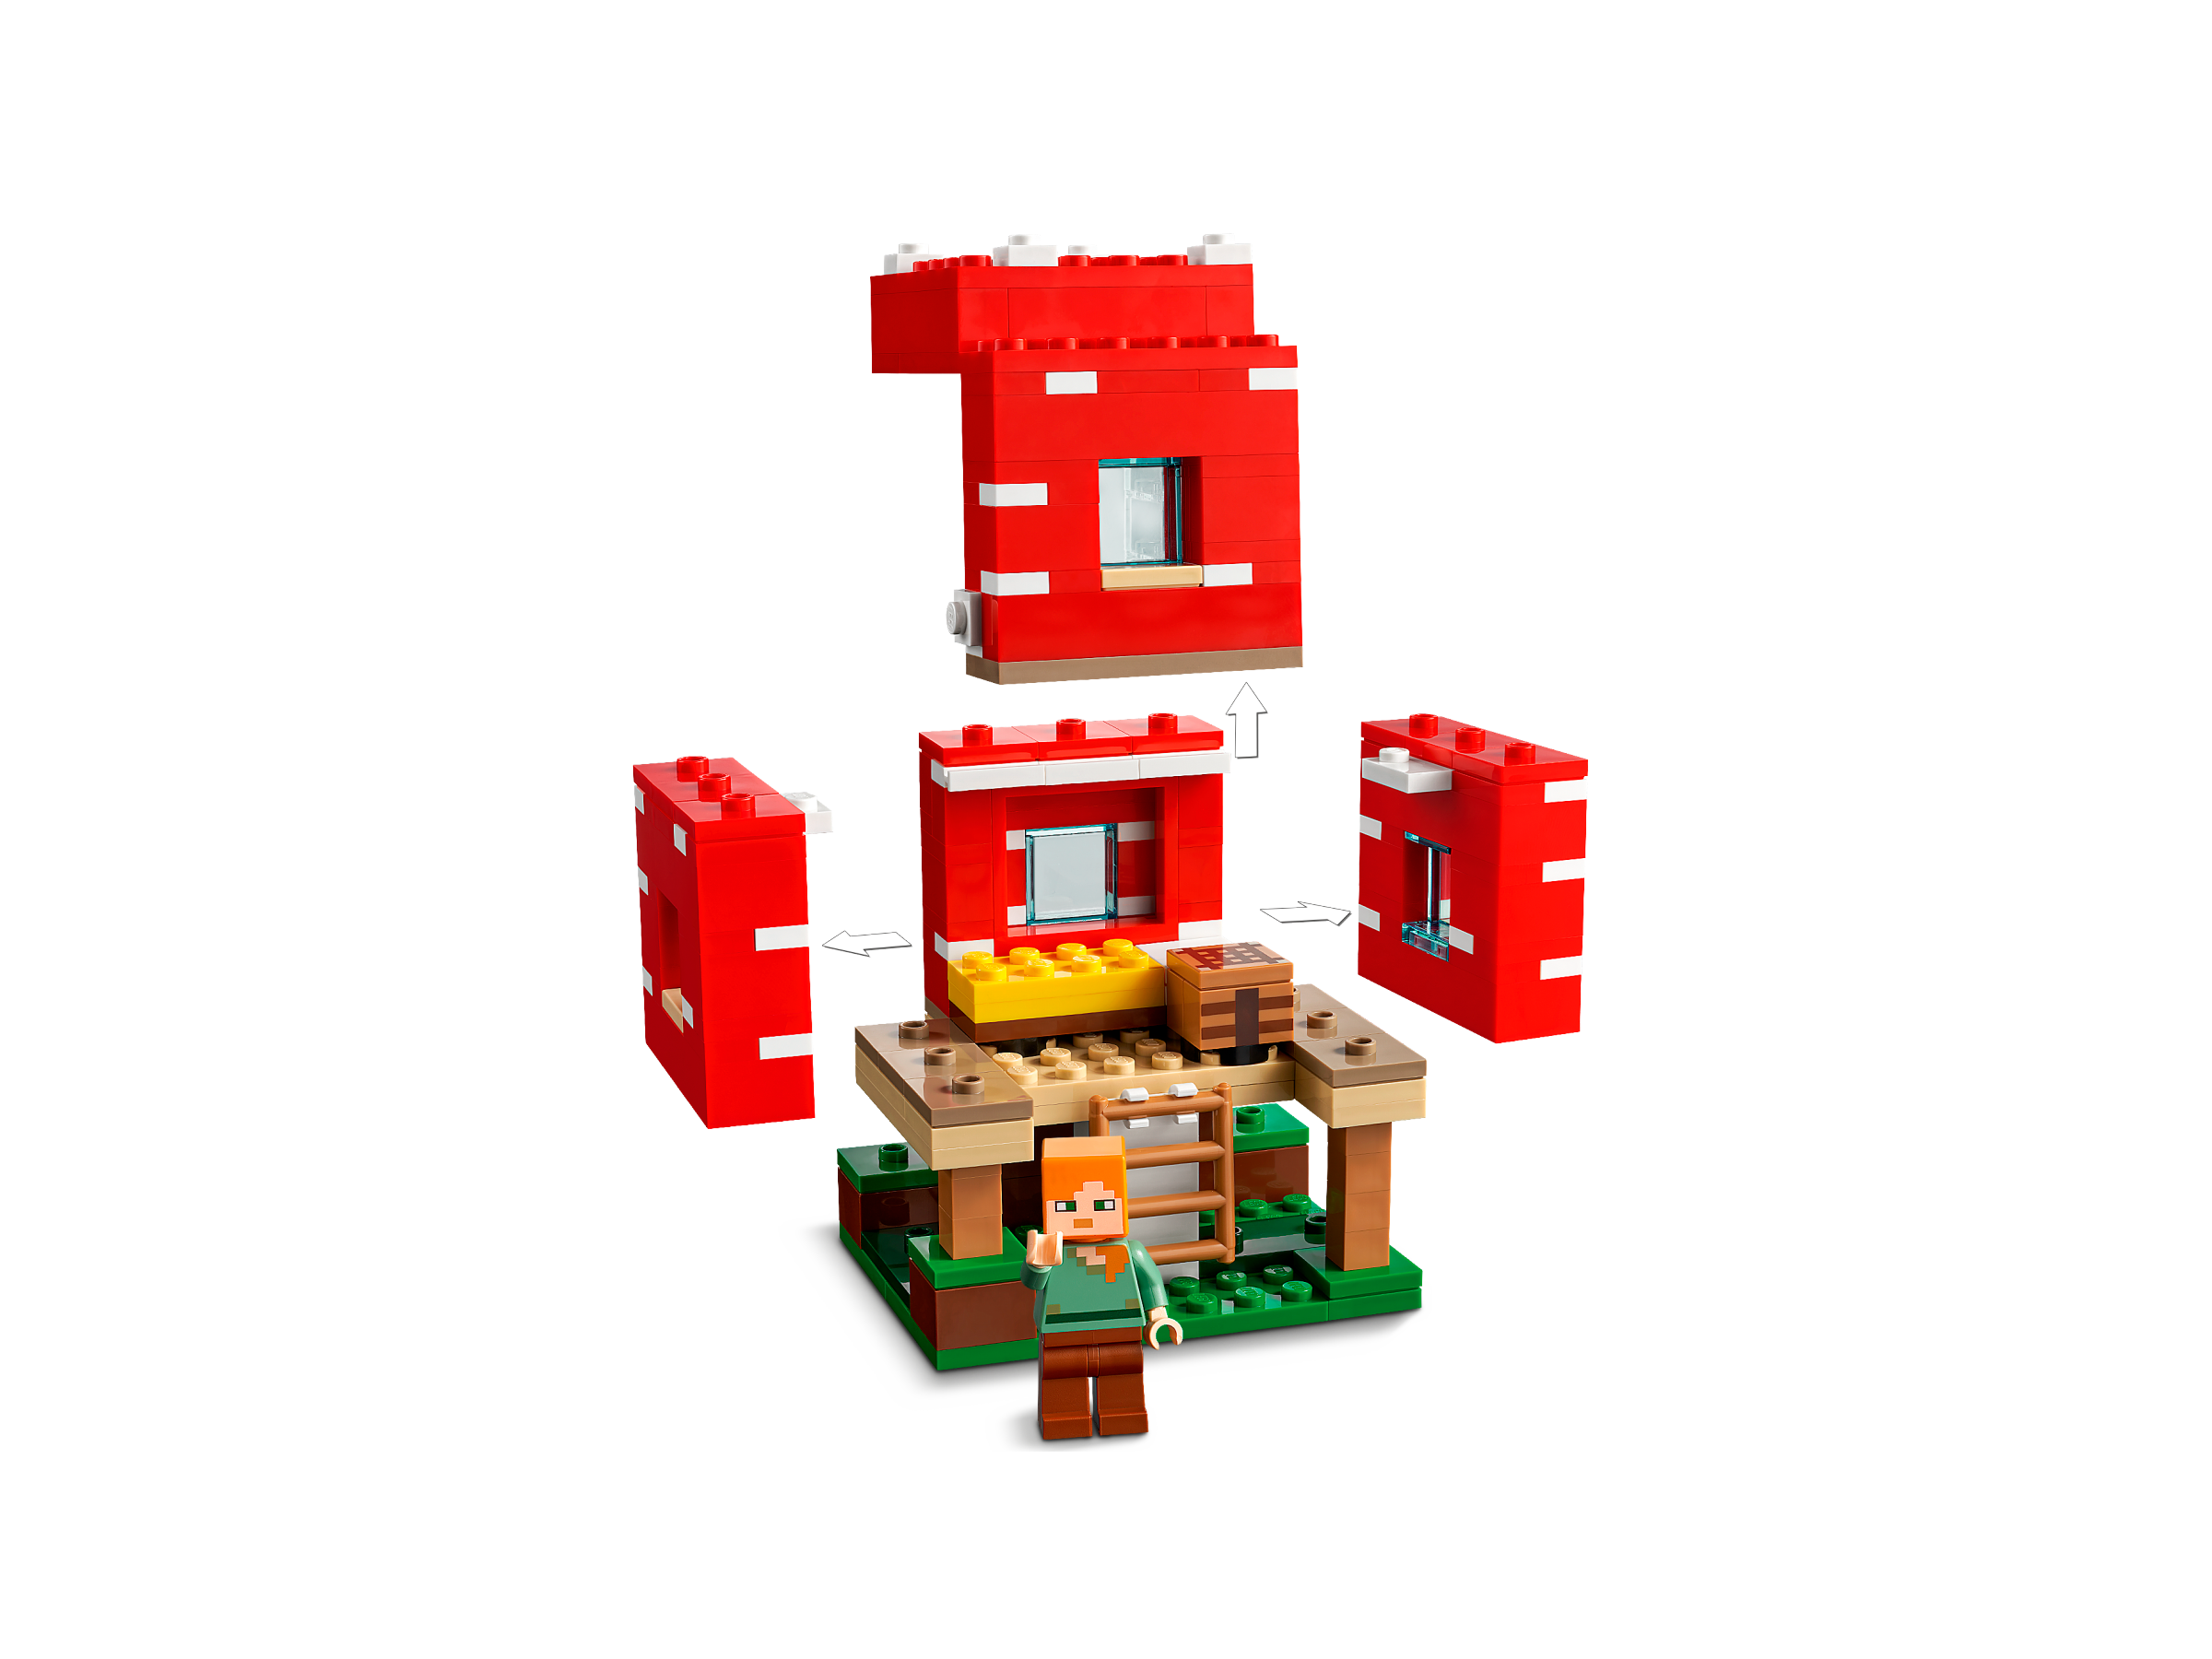 Building Toy for Kids Age 8 Mooshroom & Spider Jockey Figures Gift Idea with Alex LEGO 21179 Minecraft The Mushroom House Set